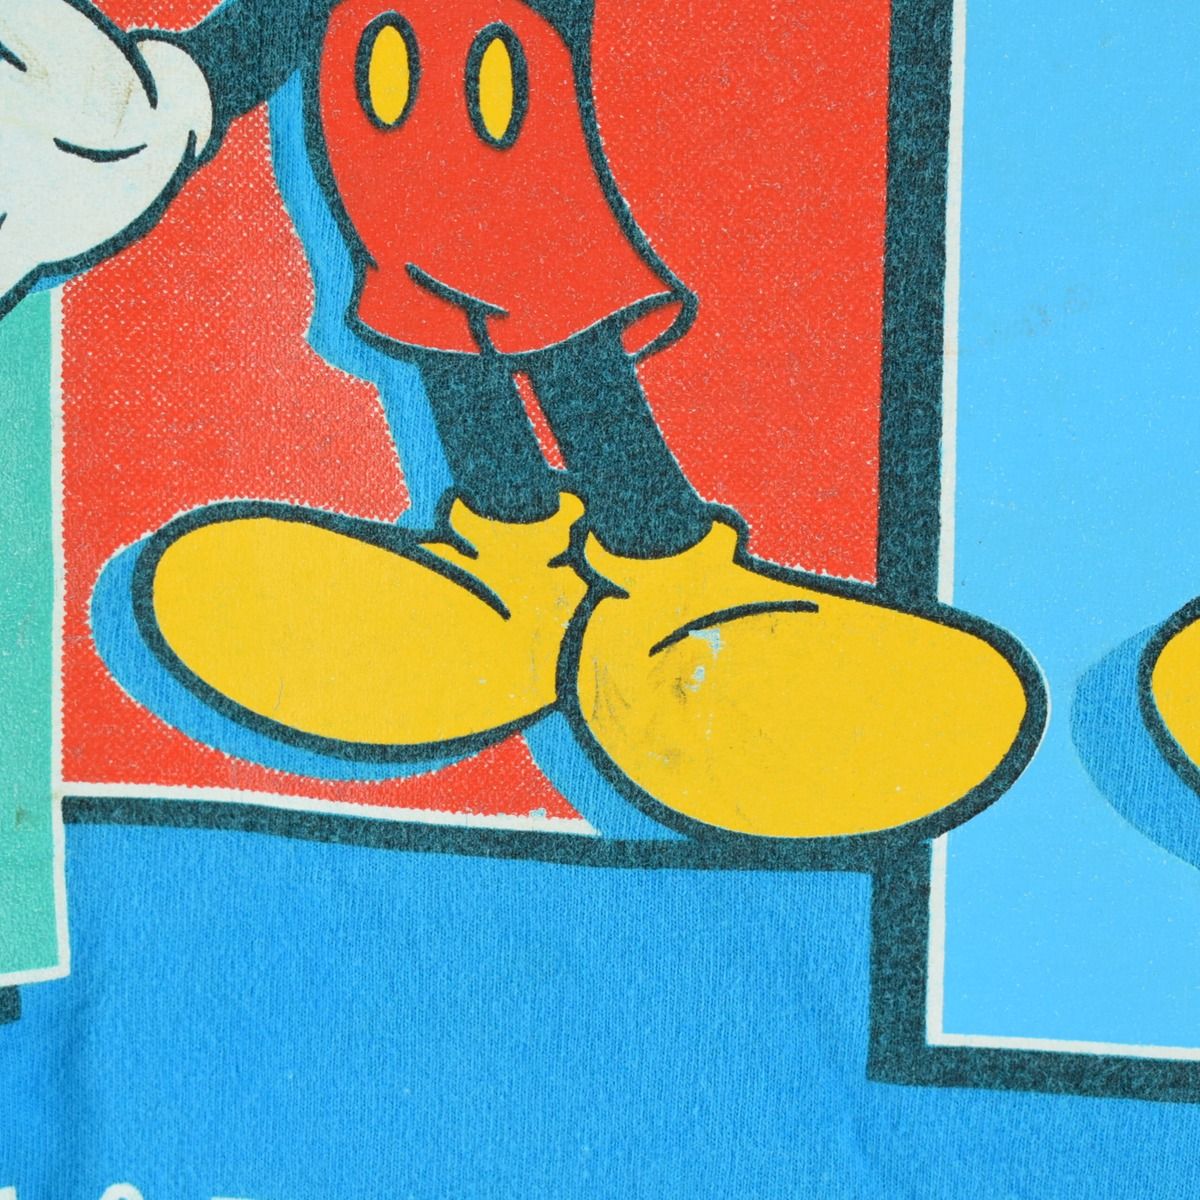 565cm袖丈90年代 MICKEY UNLIMITED MICKEY MOUSE ミッキーマウス キャラクタープリントTシャツ メンズXXL ヴィンテージ /eaa357939